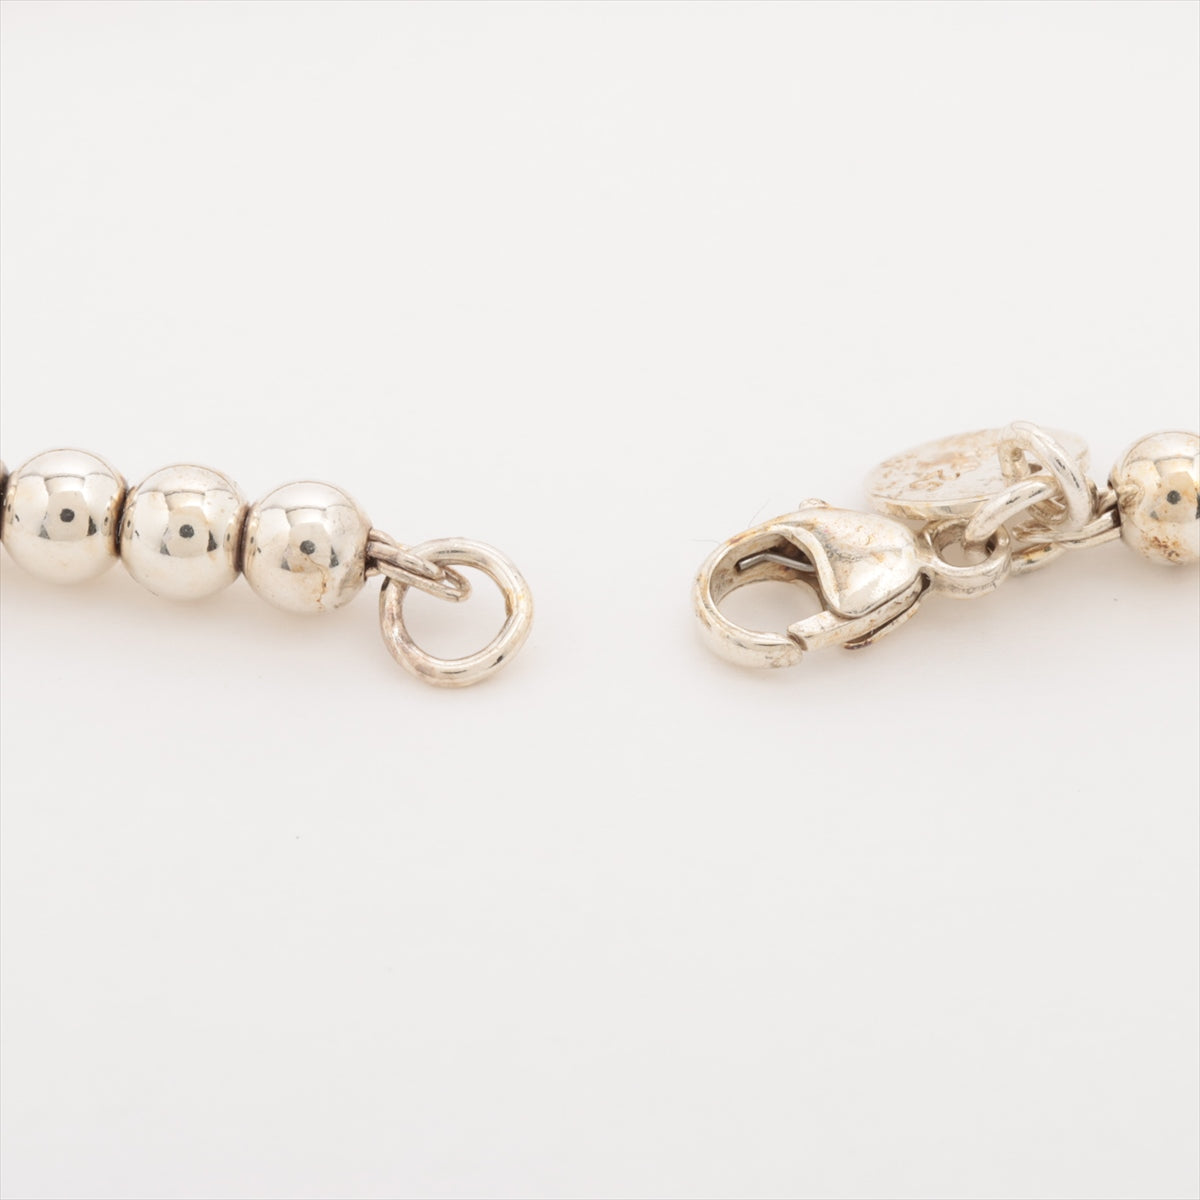 Tiffany Return To Tiffany Heart Tag Bracelet 925 5.4g Silver Ball Chain